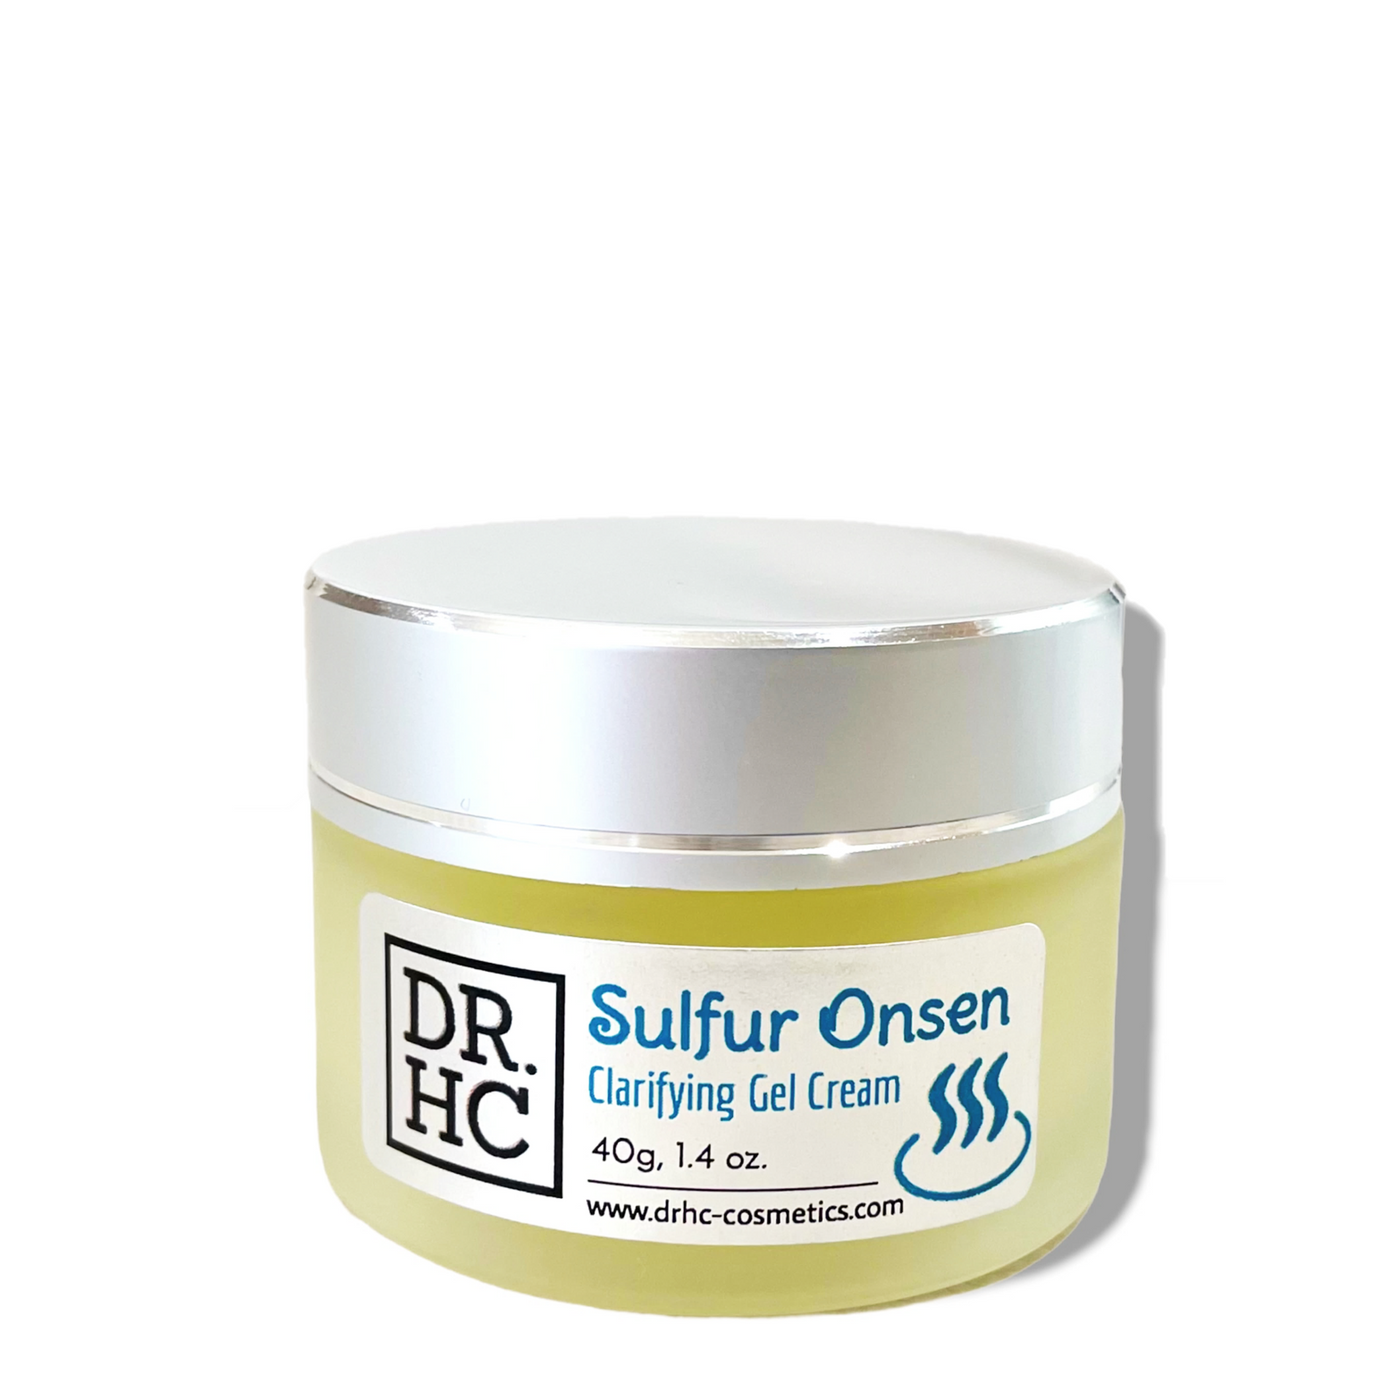 DR.HC Sulfur Onsen Clarifying Gel Cream (25~40g, 0.9~1.4oz) (Acne-acne, Anti-blemish, Oil-balancing, Gently Exfoliating...)-3